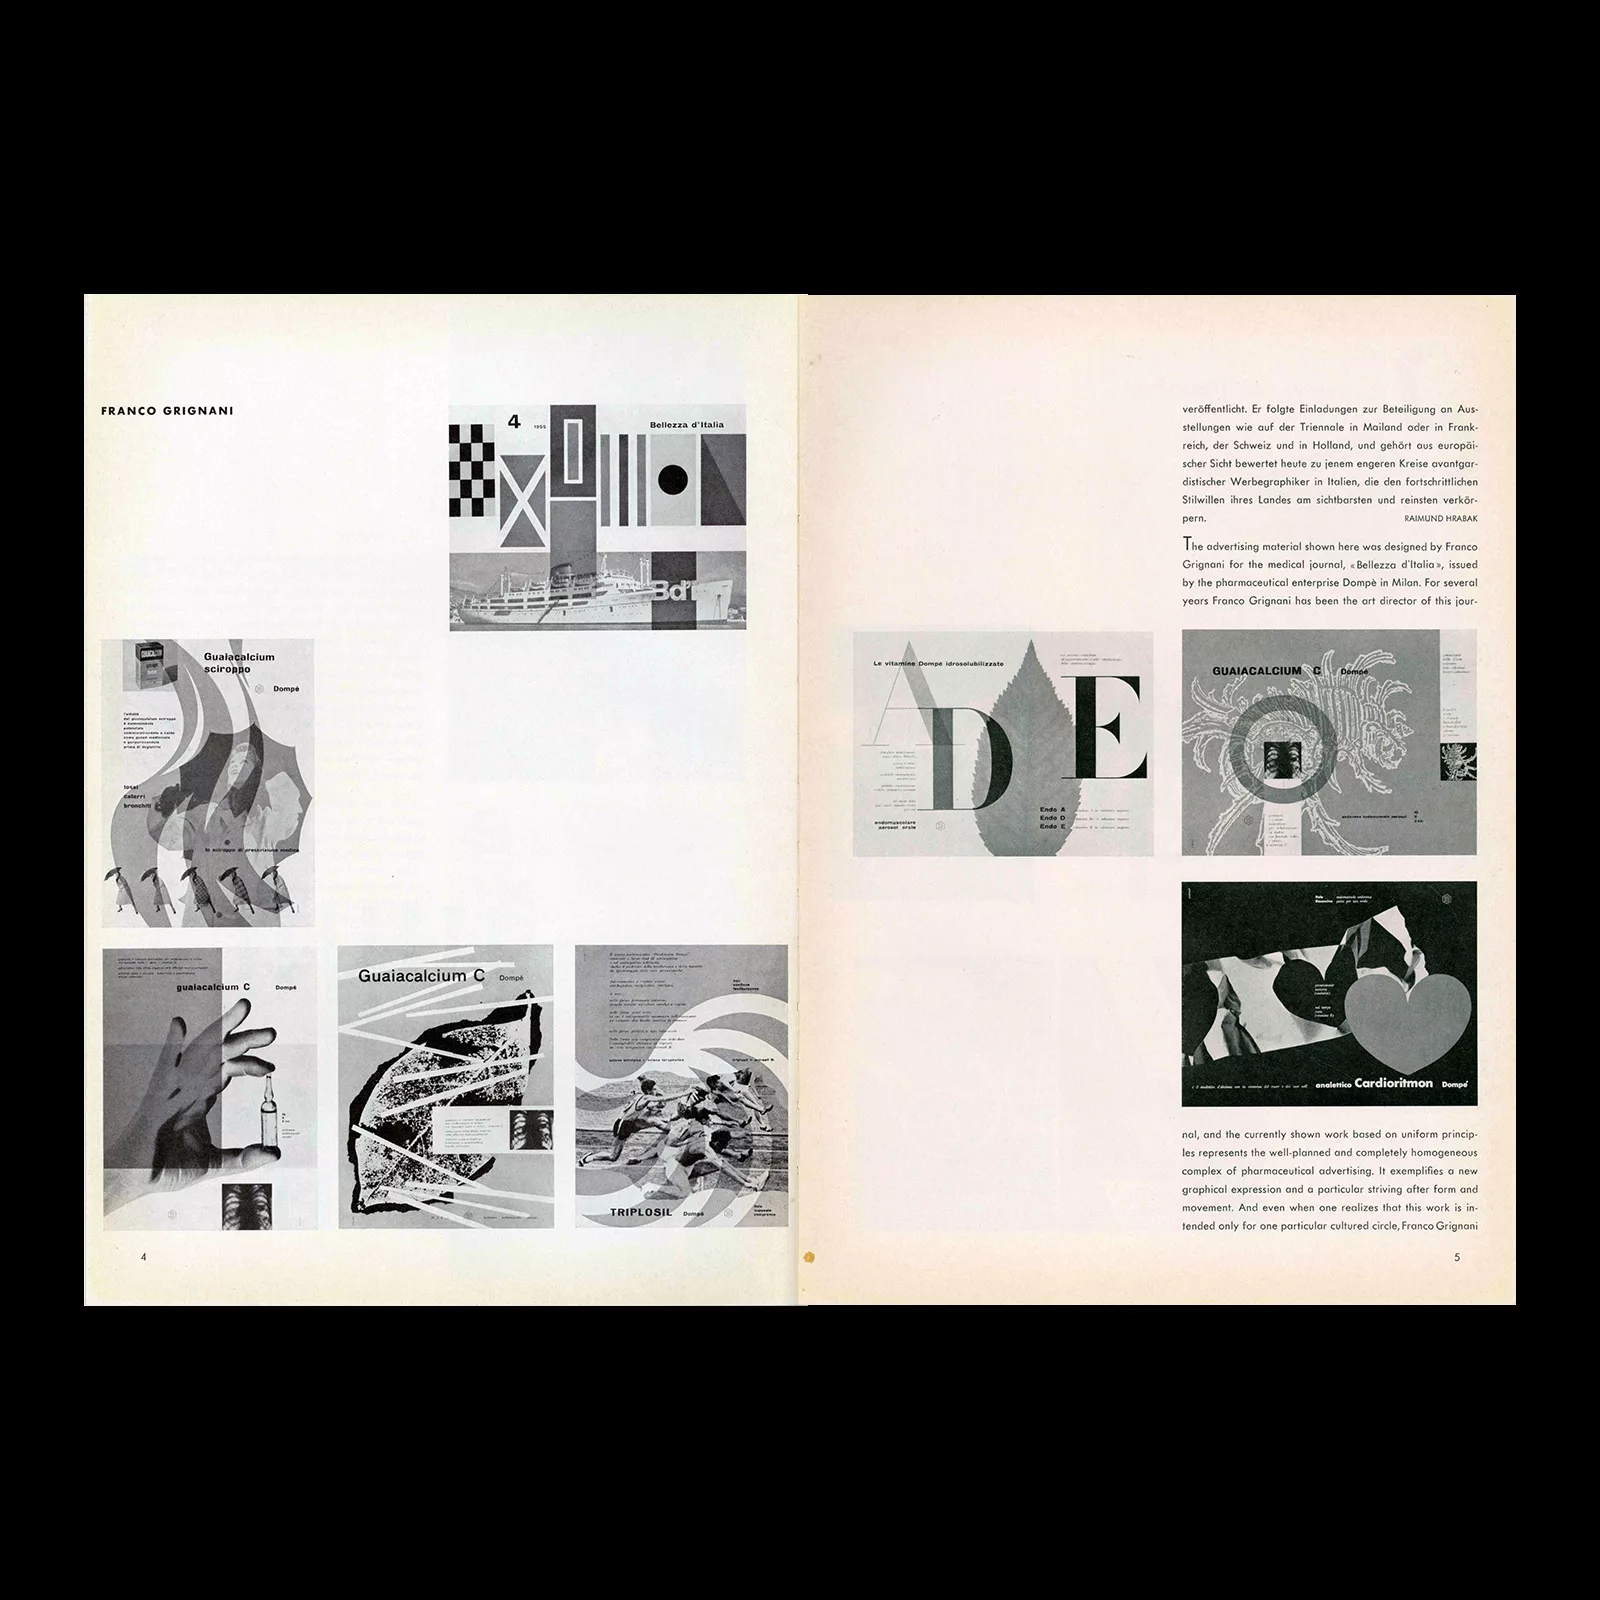 Gebrauchsgraphik, 3, 1956. Franco Grignani Feature